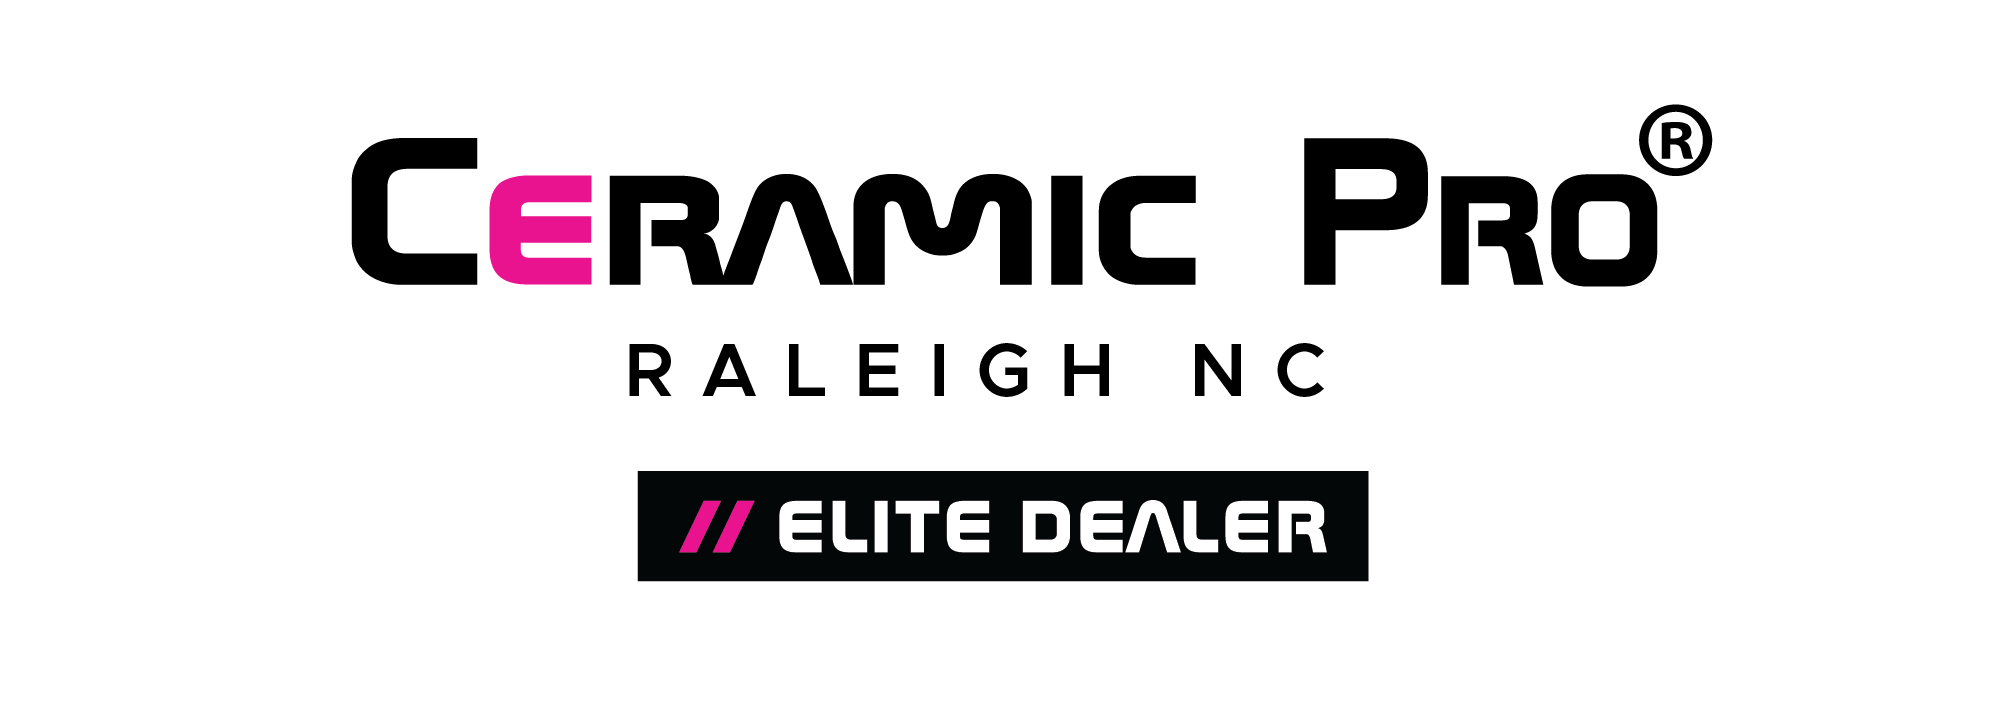 Ceramic-Pro-Elite-Dealer-Raleigh-Logo-1.png